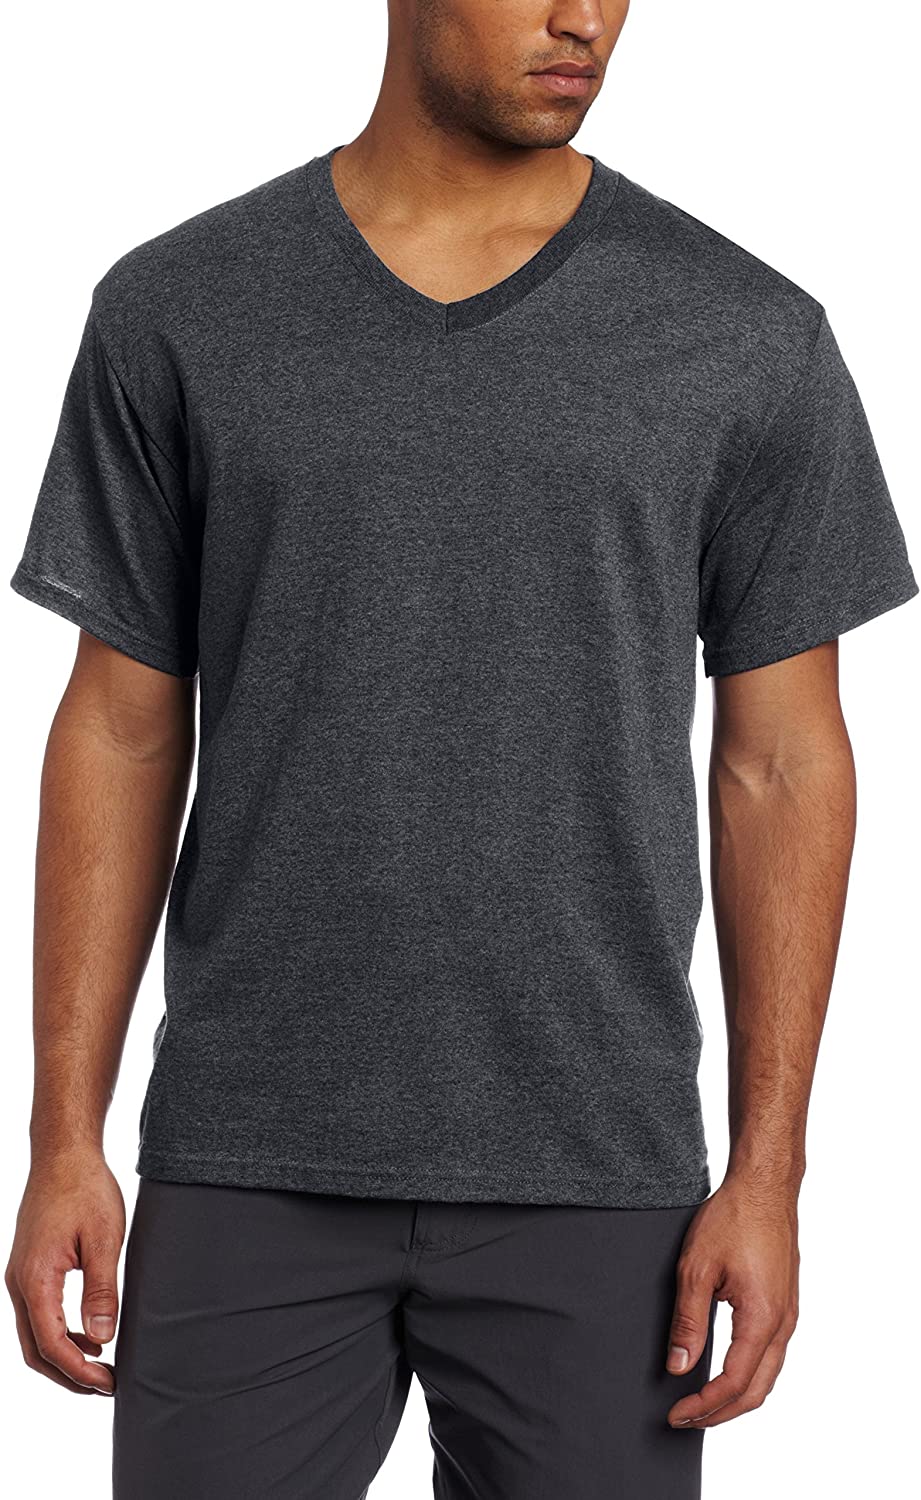 3XL Russell Mens Slim Fit Plain Polycotton Vee V-Neck T-Shirt Tee Shirt XS